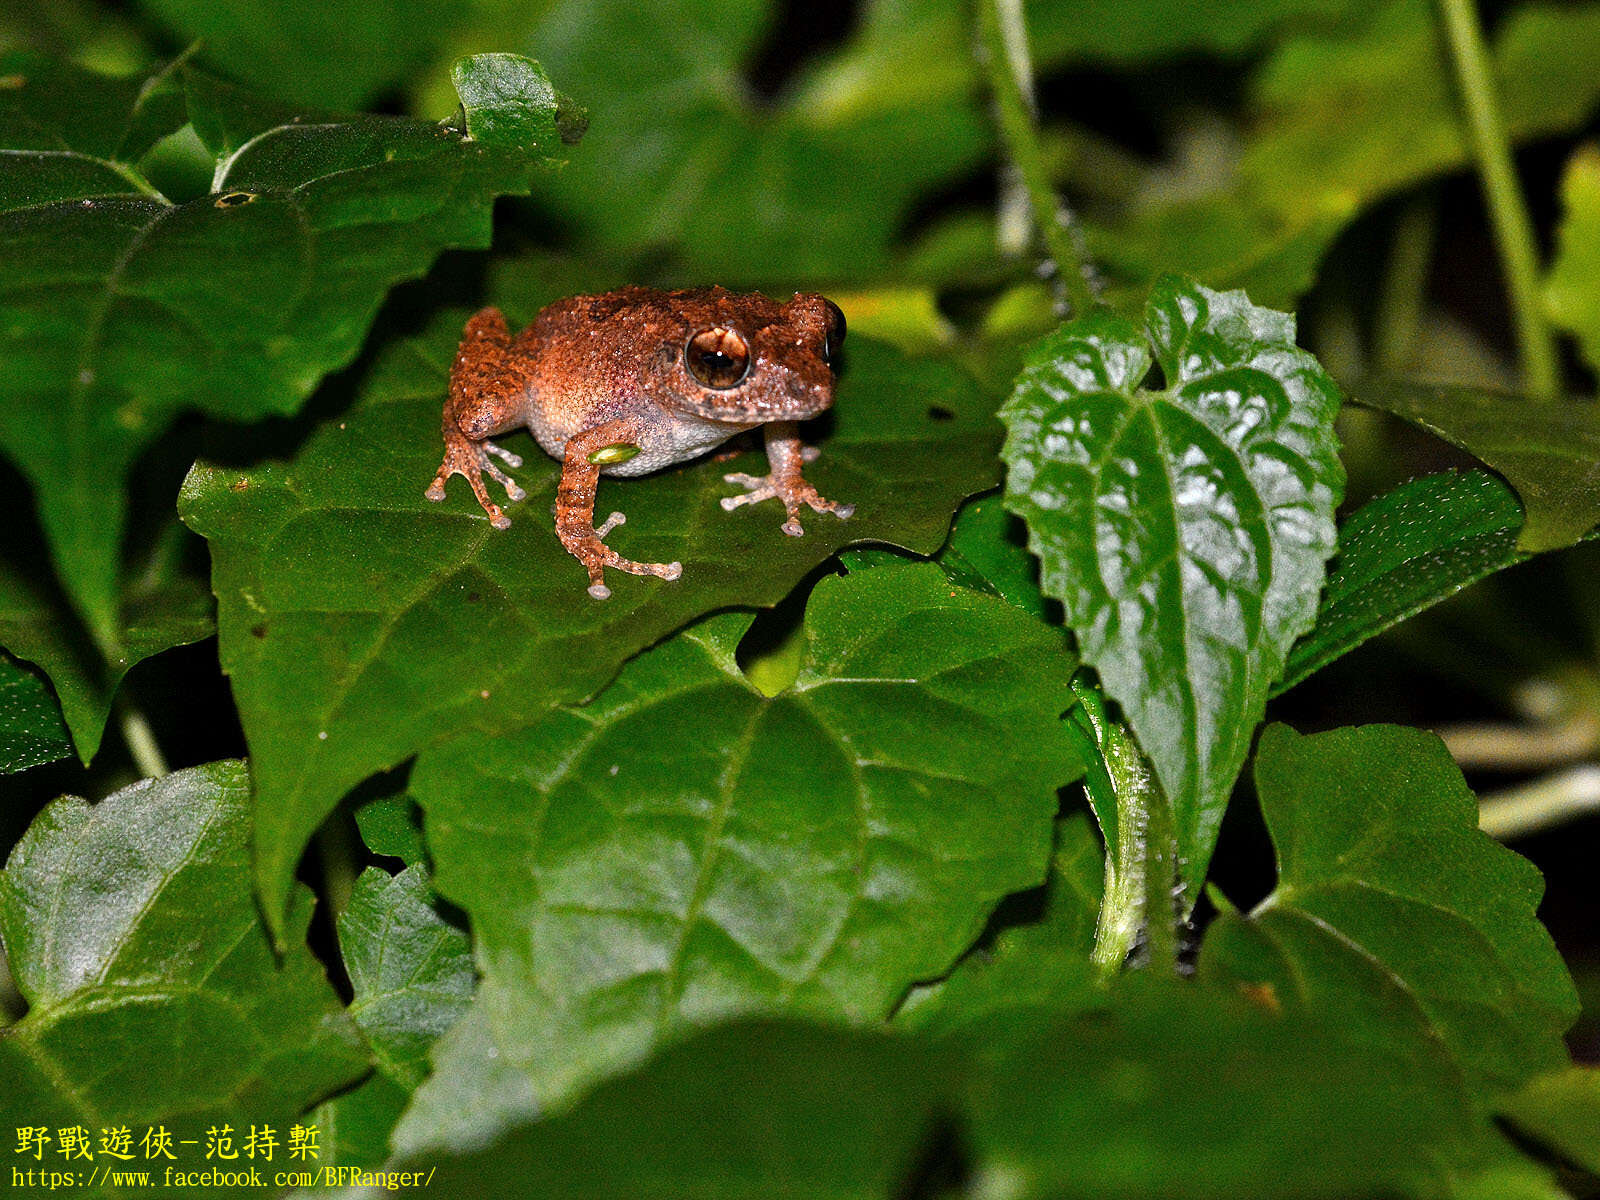 Image of Kandyan shrub frog